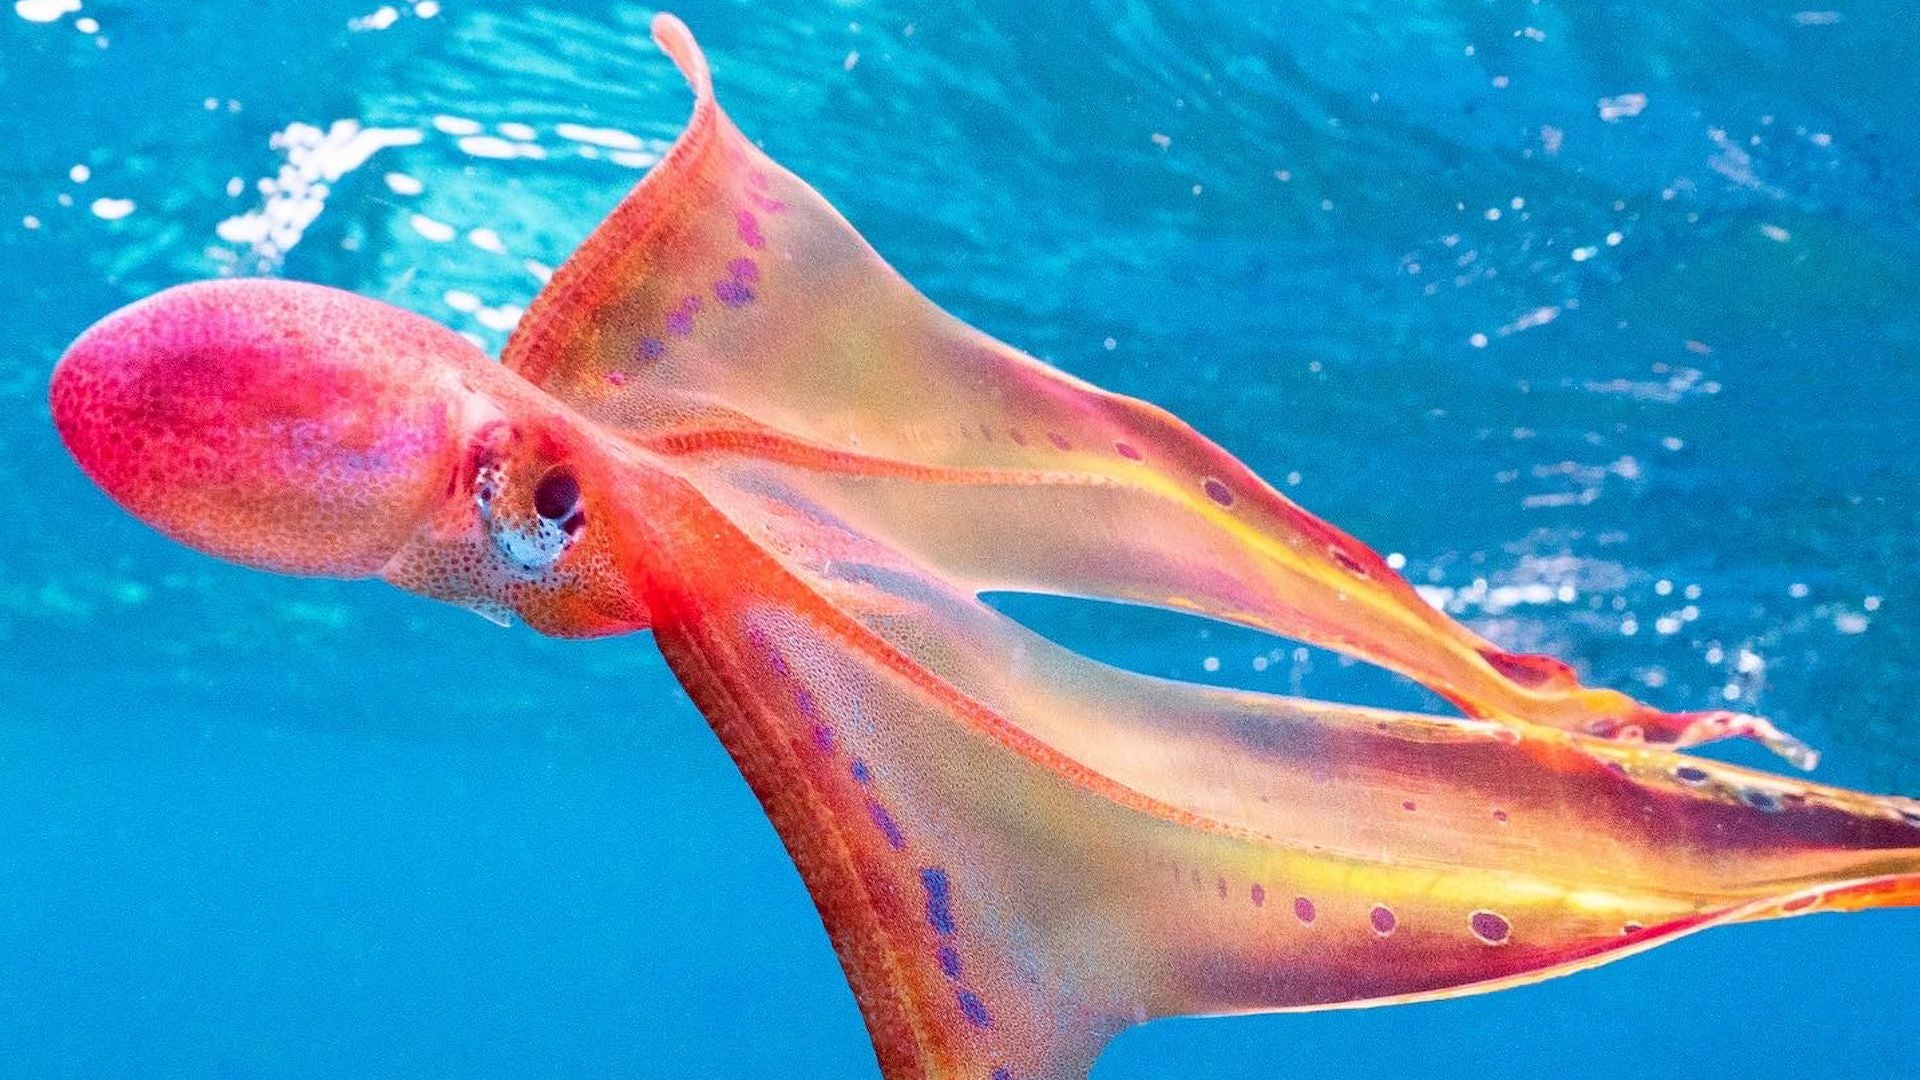 Meet the incredible blanket octopus